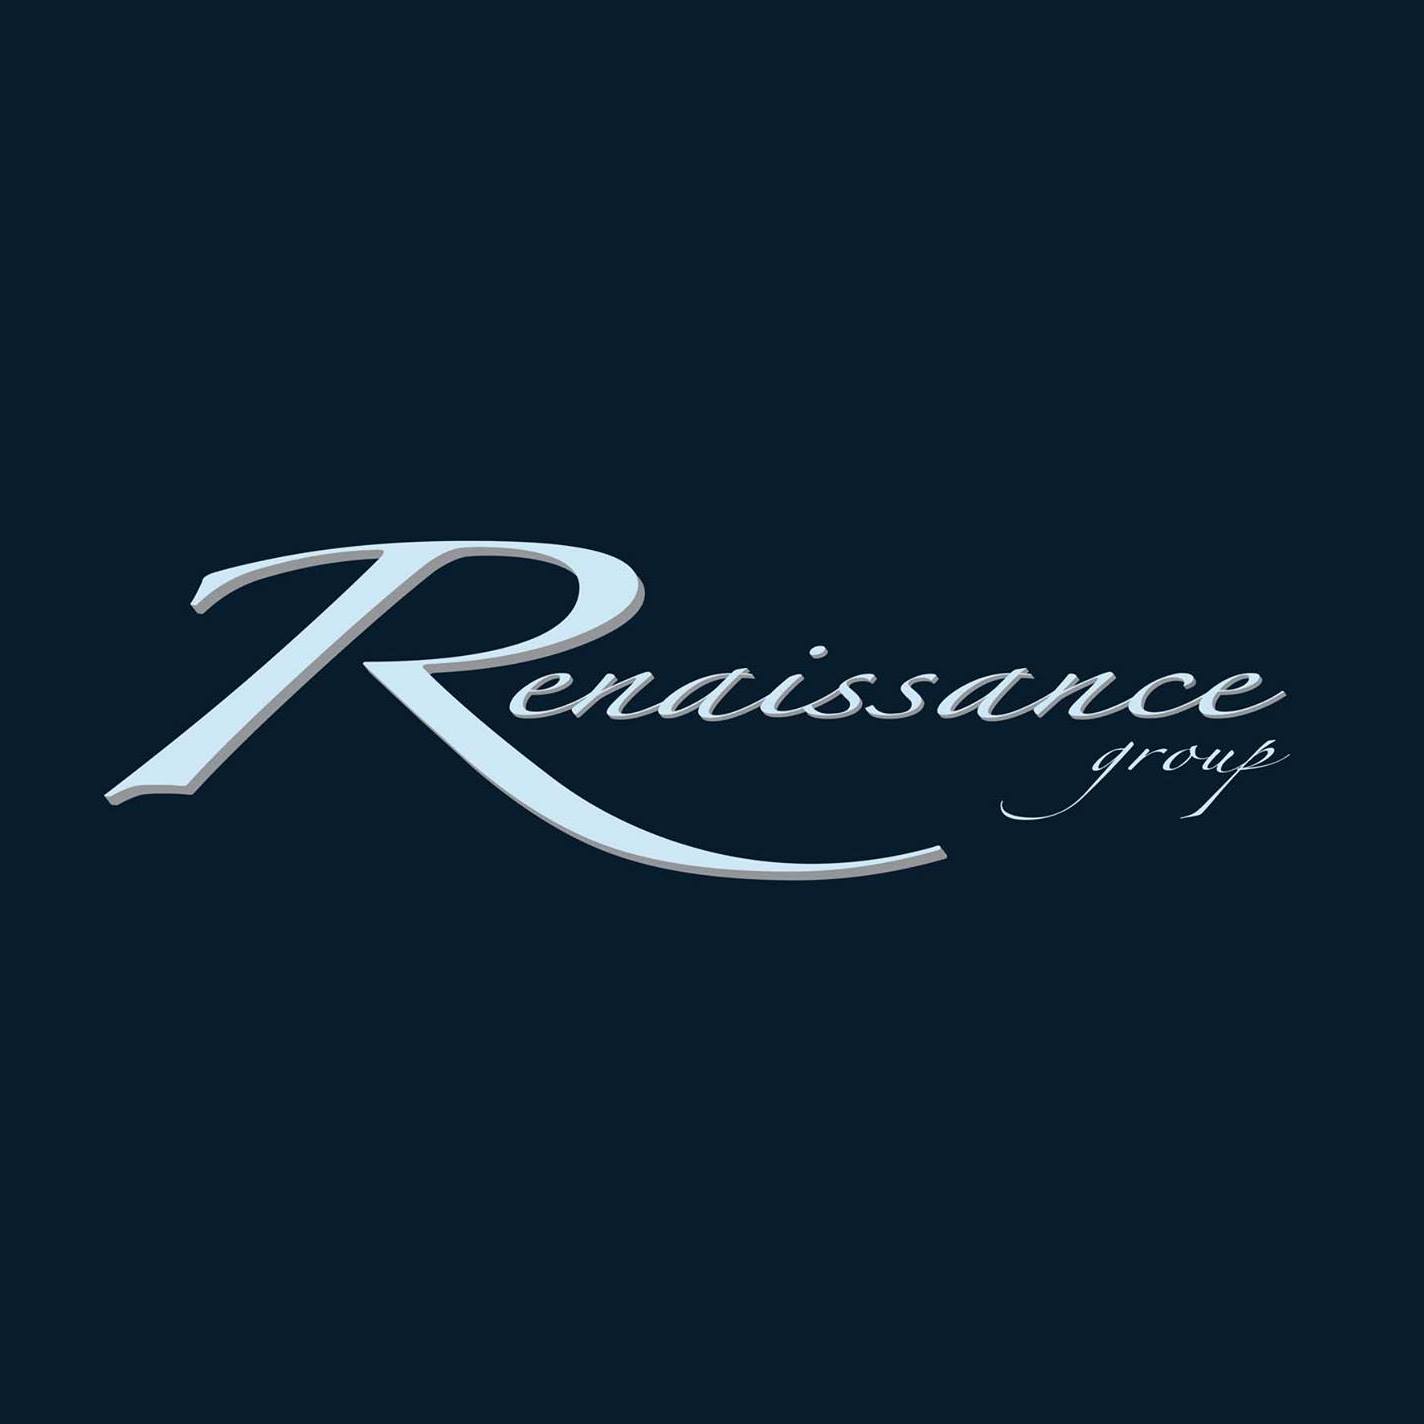 Renaissance Barind Ltd.